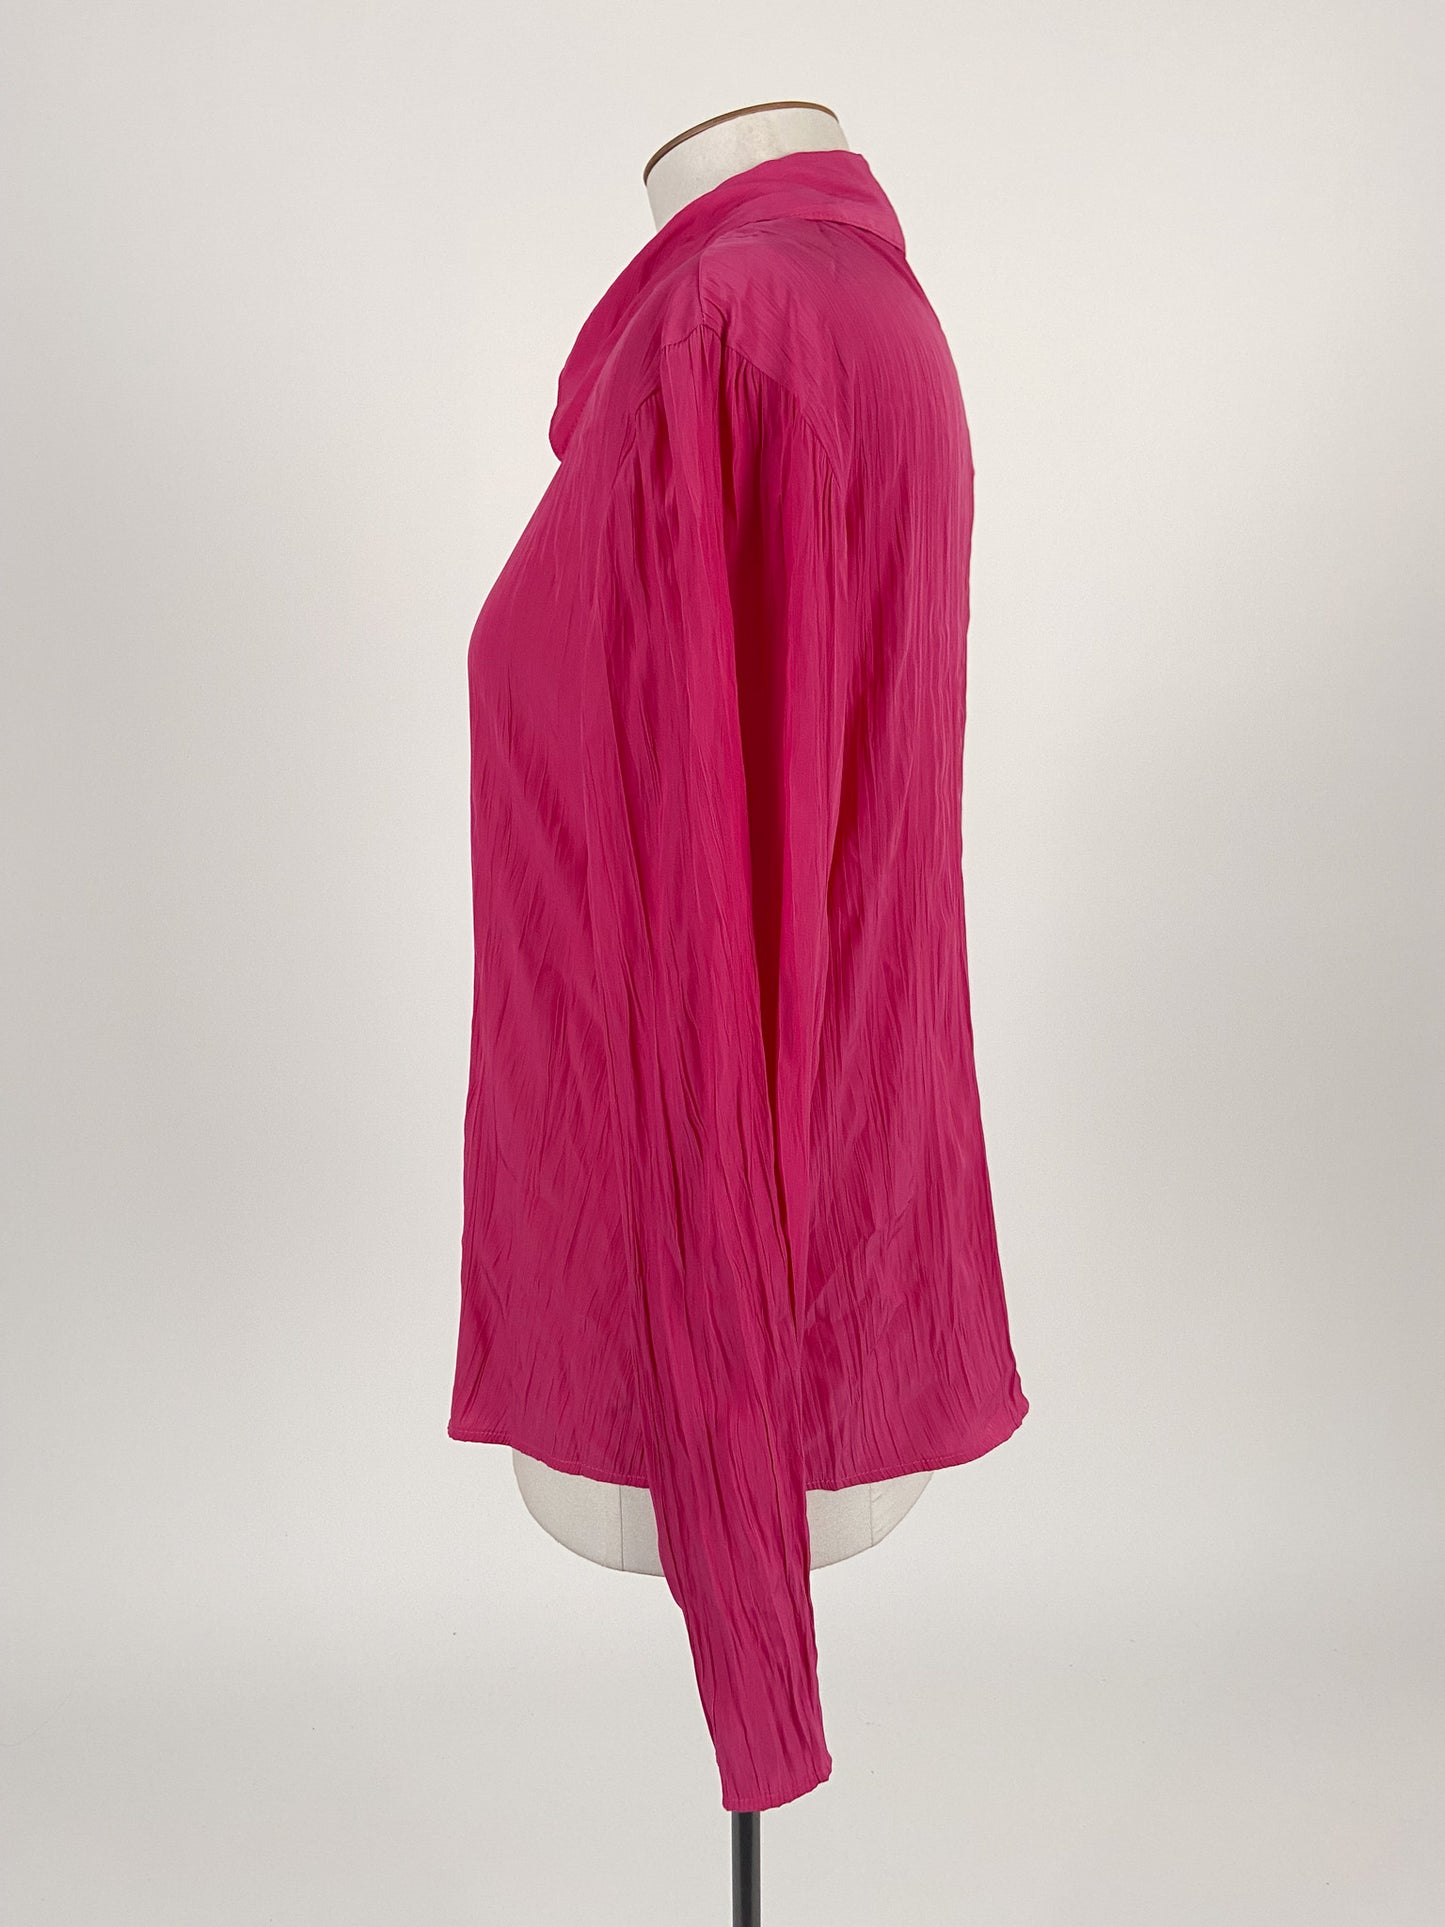 Kate Sylvester | Pink Workwear Top | Size 14